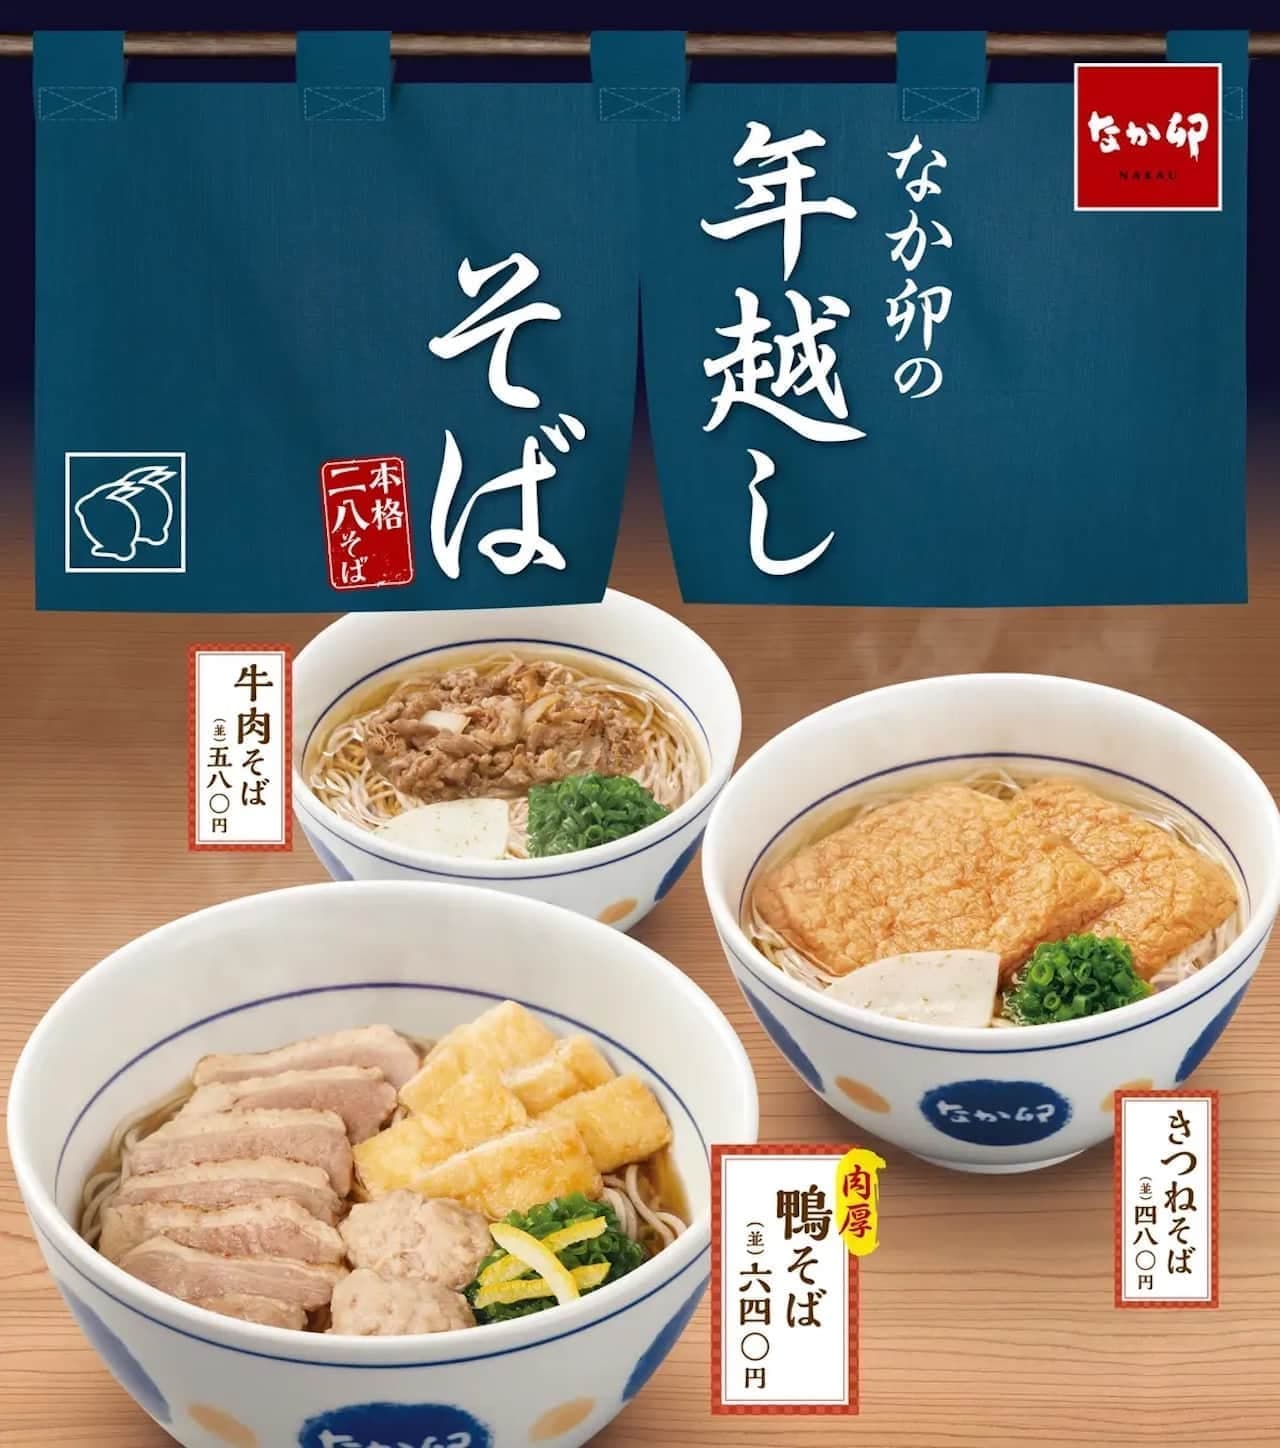 Nakau authentic "Nihachi Soba" noodles: "Kamo Soba (side dish)", "Kitsune Soba (side dish)" and "Beef Soba (side dish)